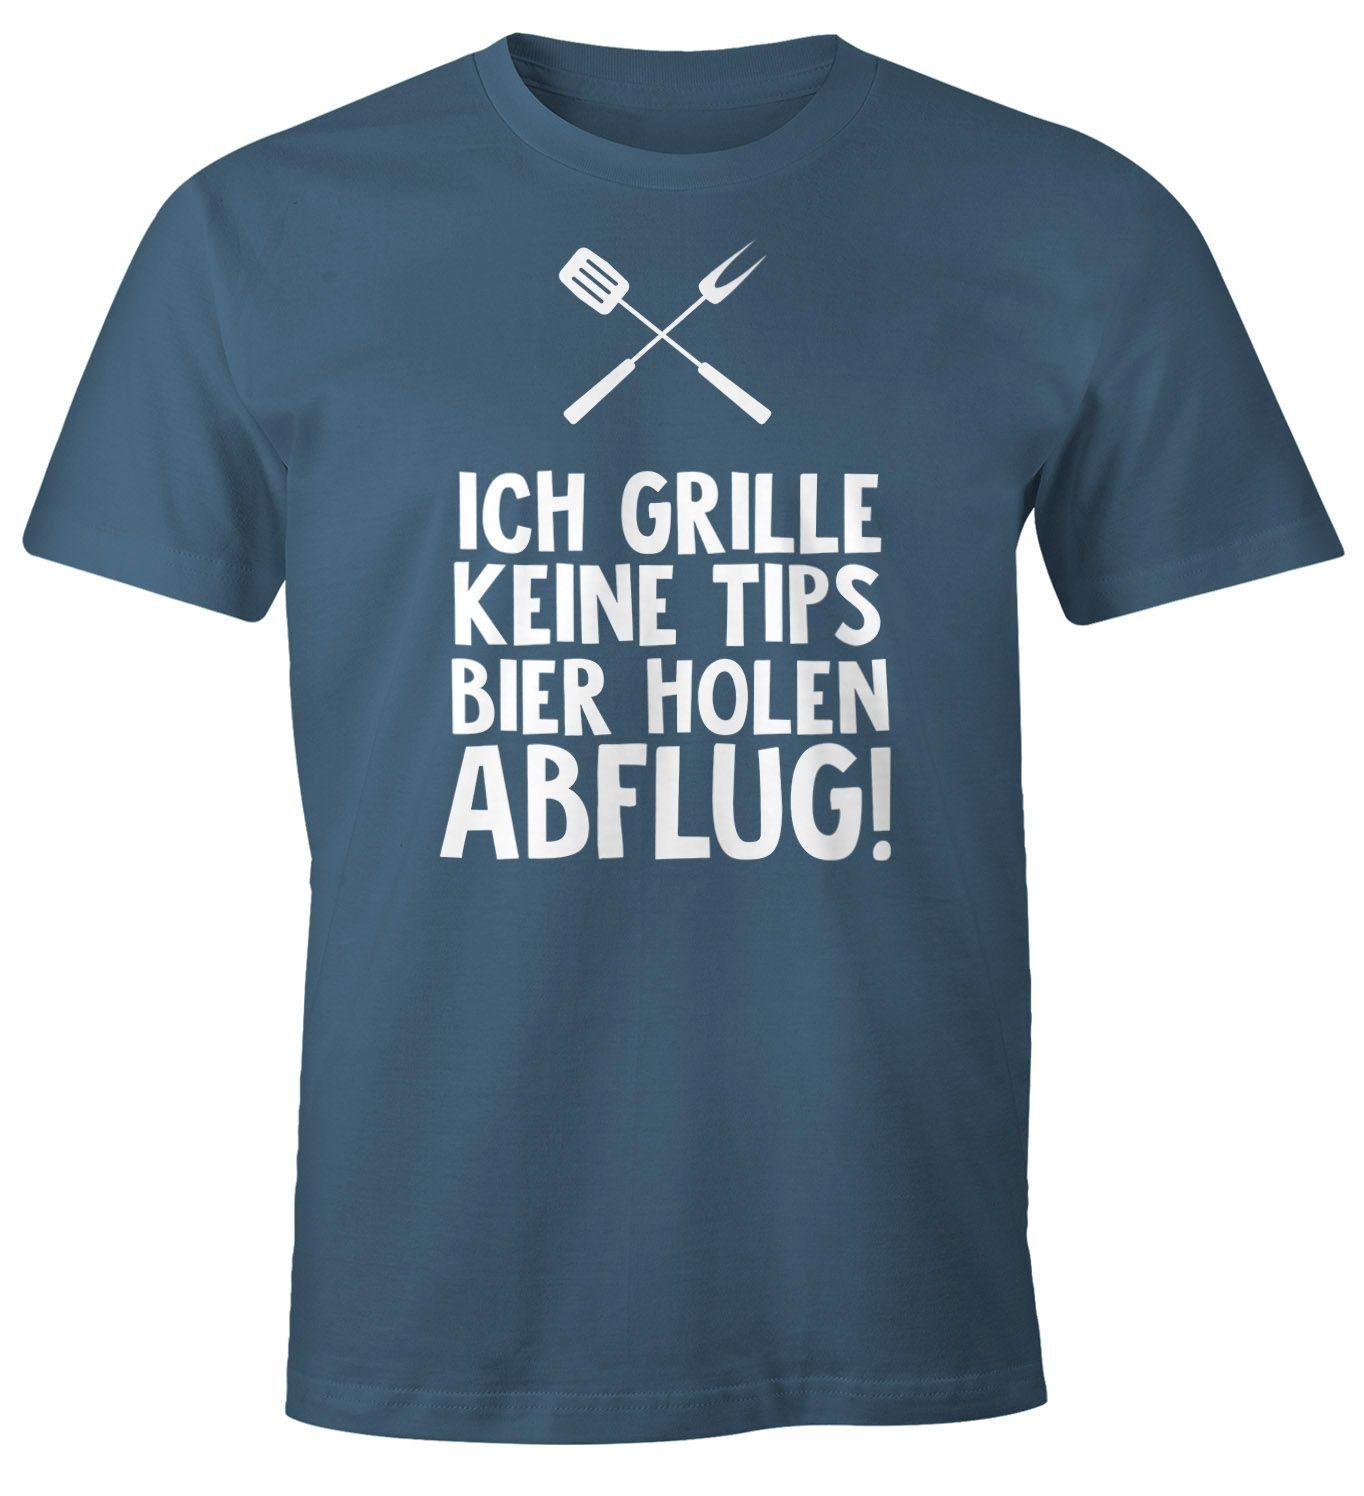 Opa muss grillen Herren T-Shirt Spruch Grill BBQ Party Geschenk Idee Lustig Cool 